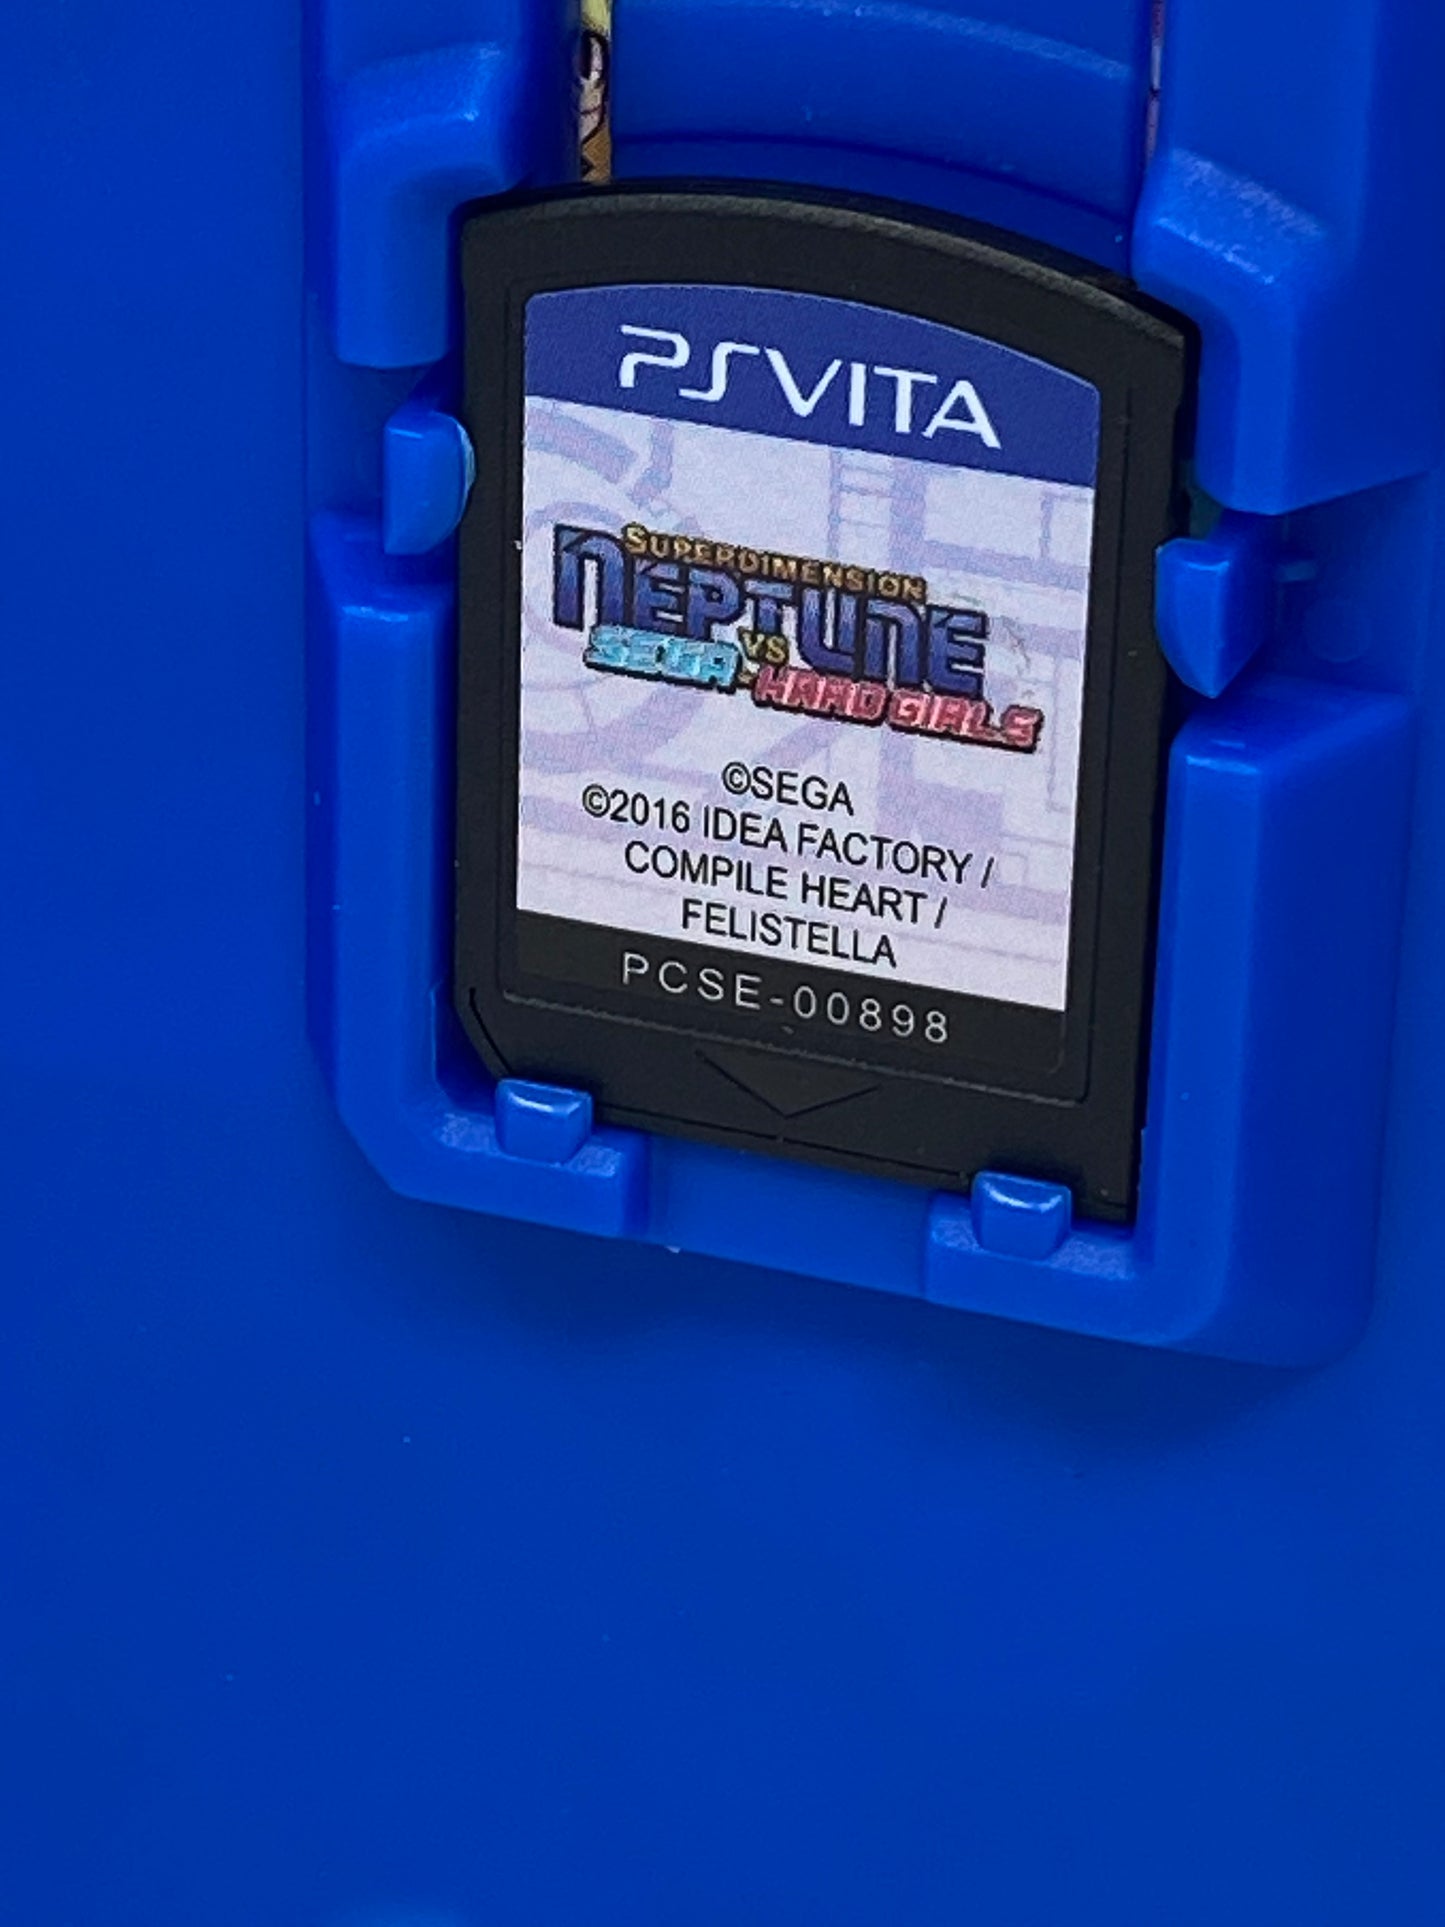 PlayStation Vita - SuperDimension Neptune vs Sega Hard Girls